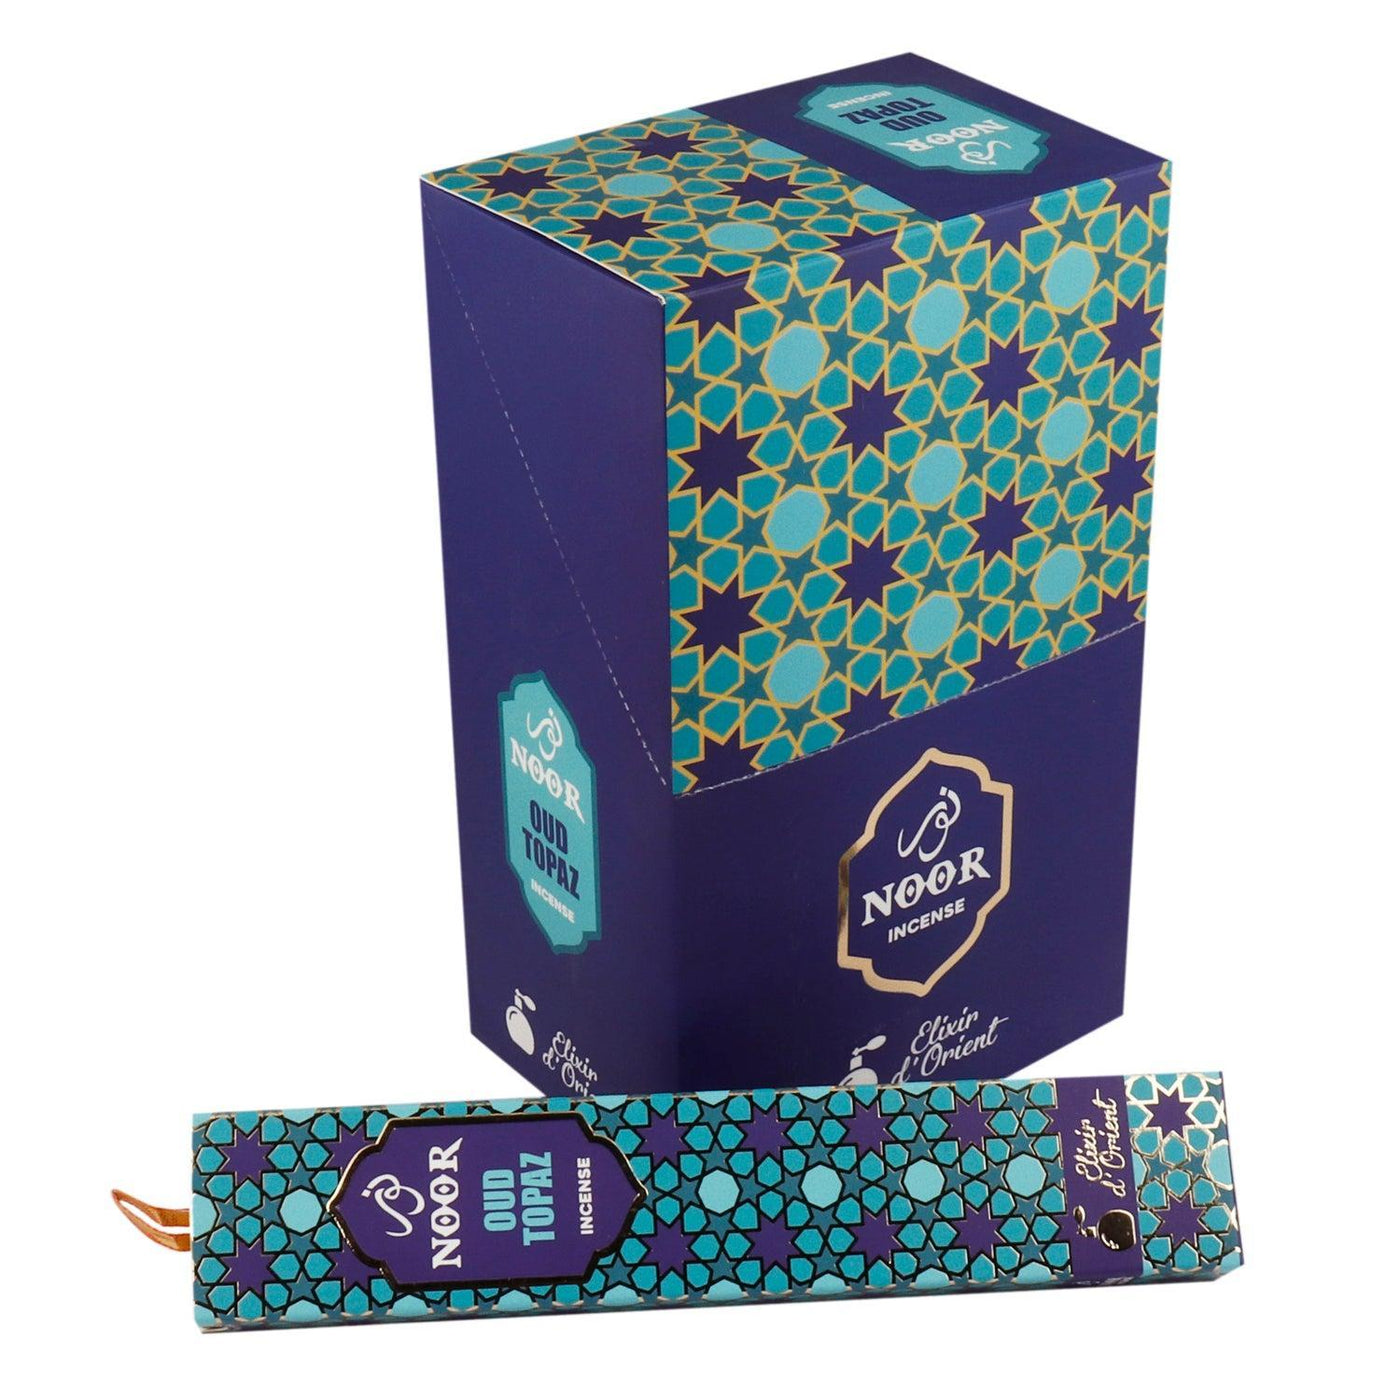 Noor Oud Premium Incense Fragrance - Topaz.